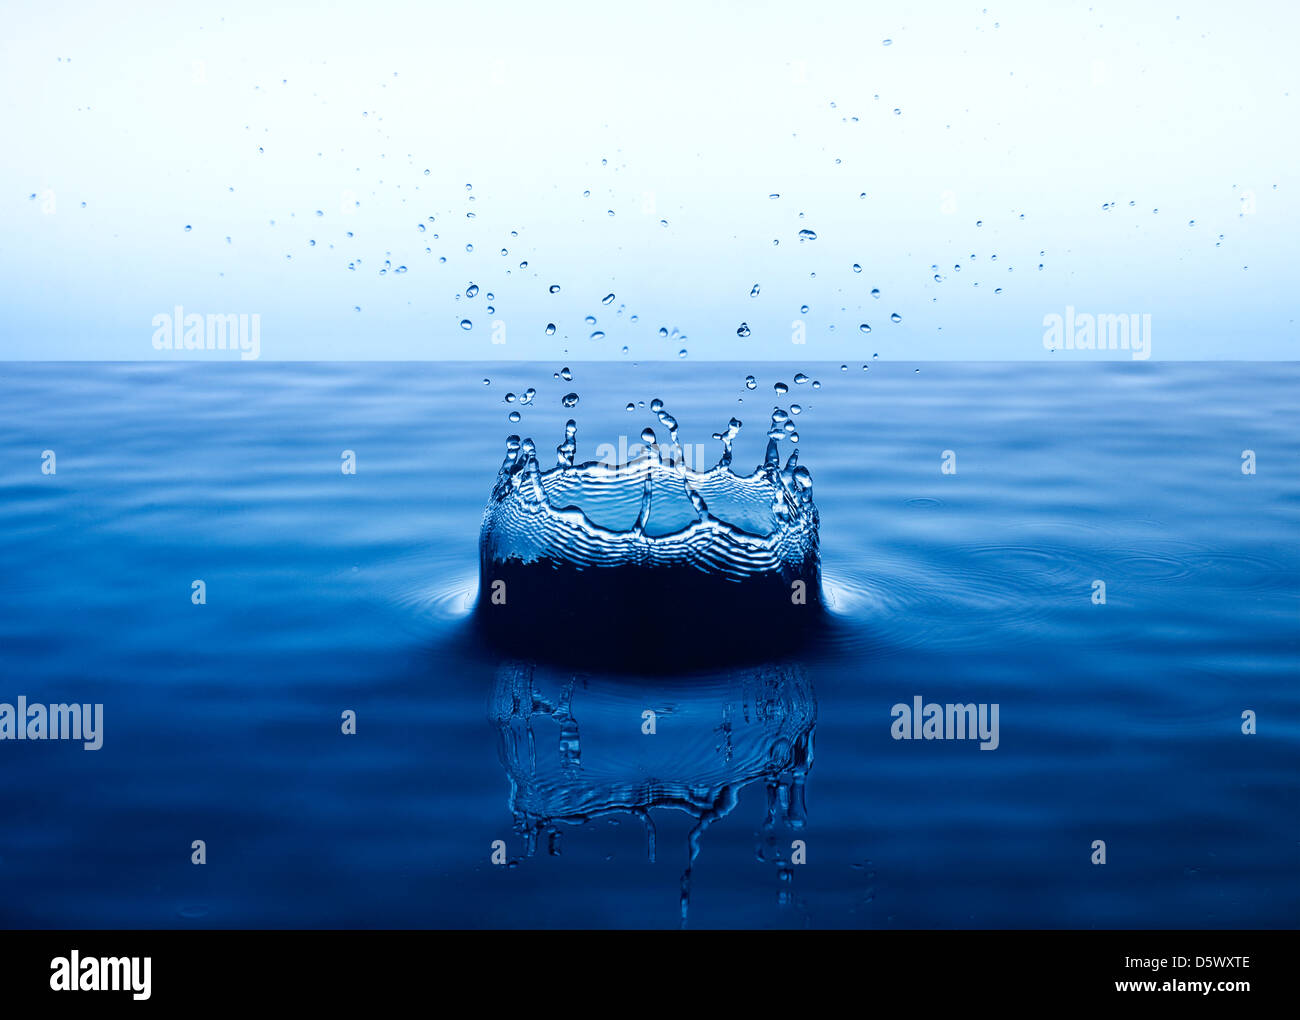 Close up of splashing water droplet Stock Photo